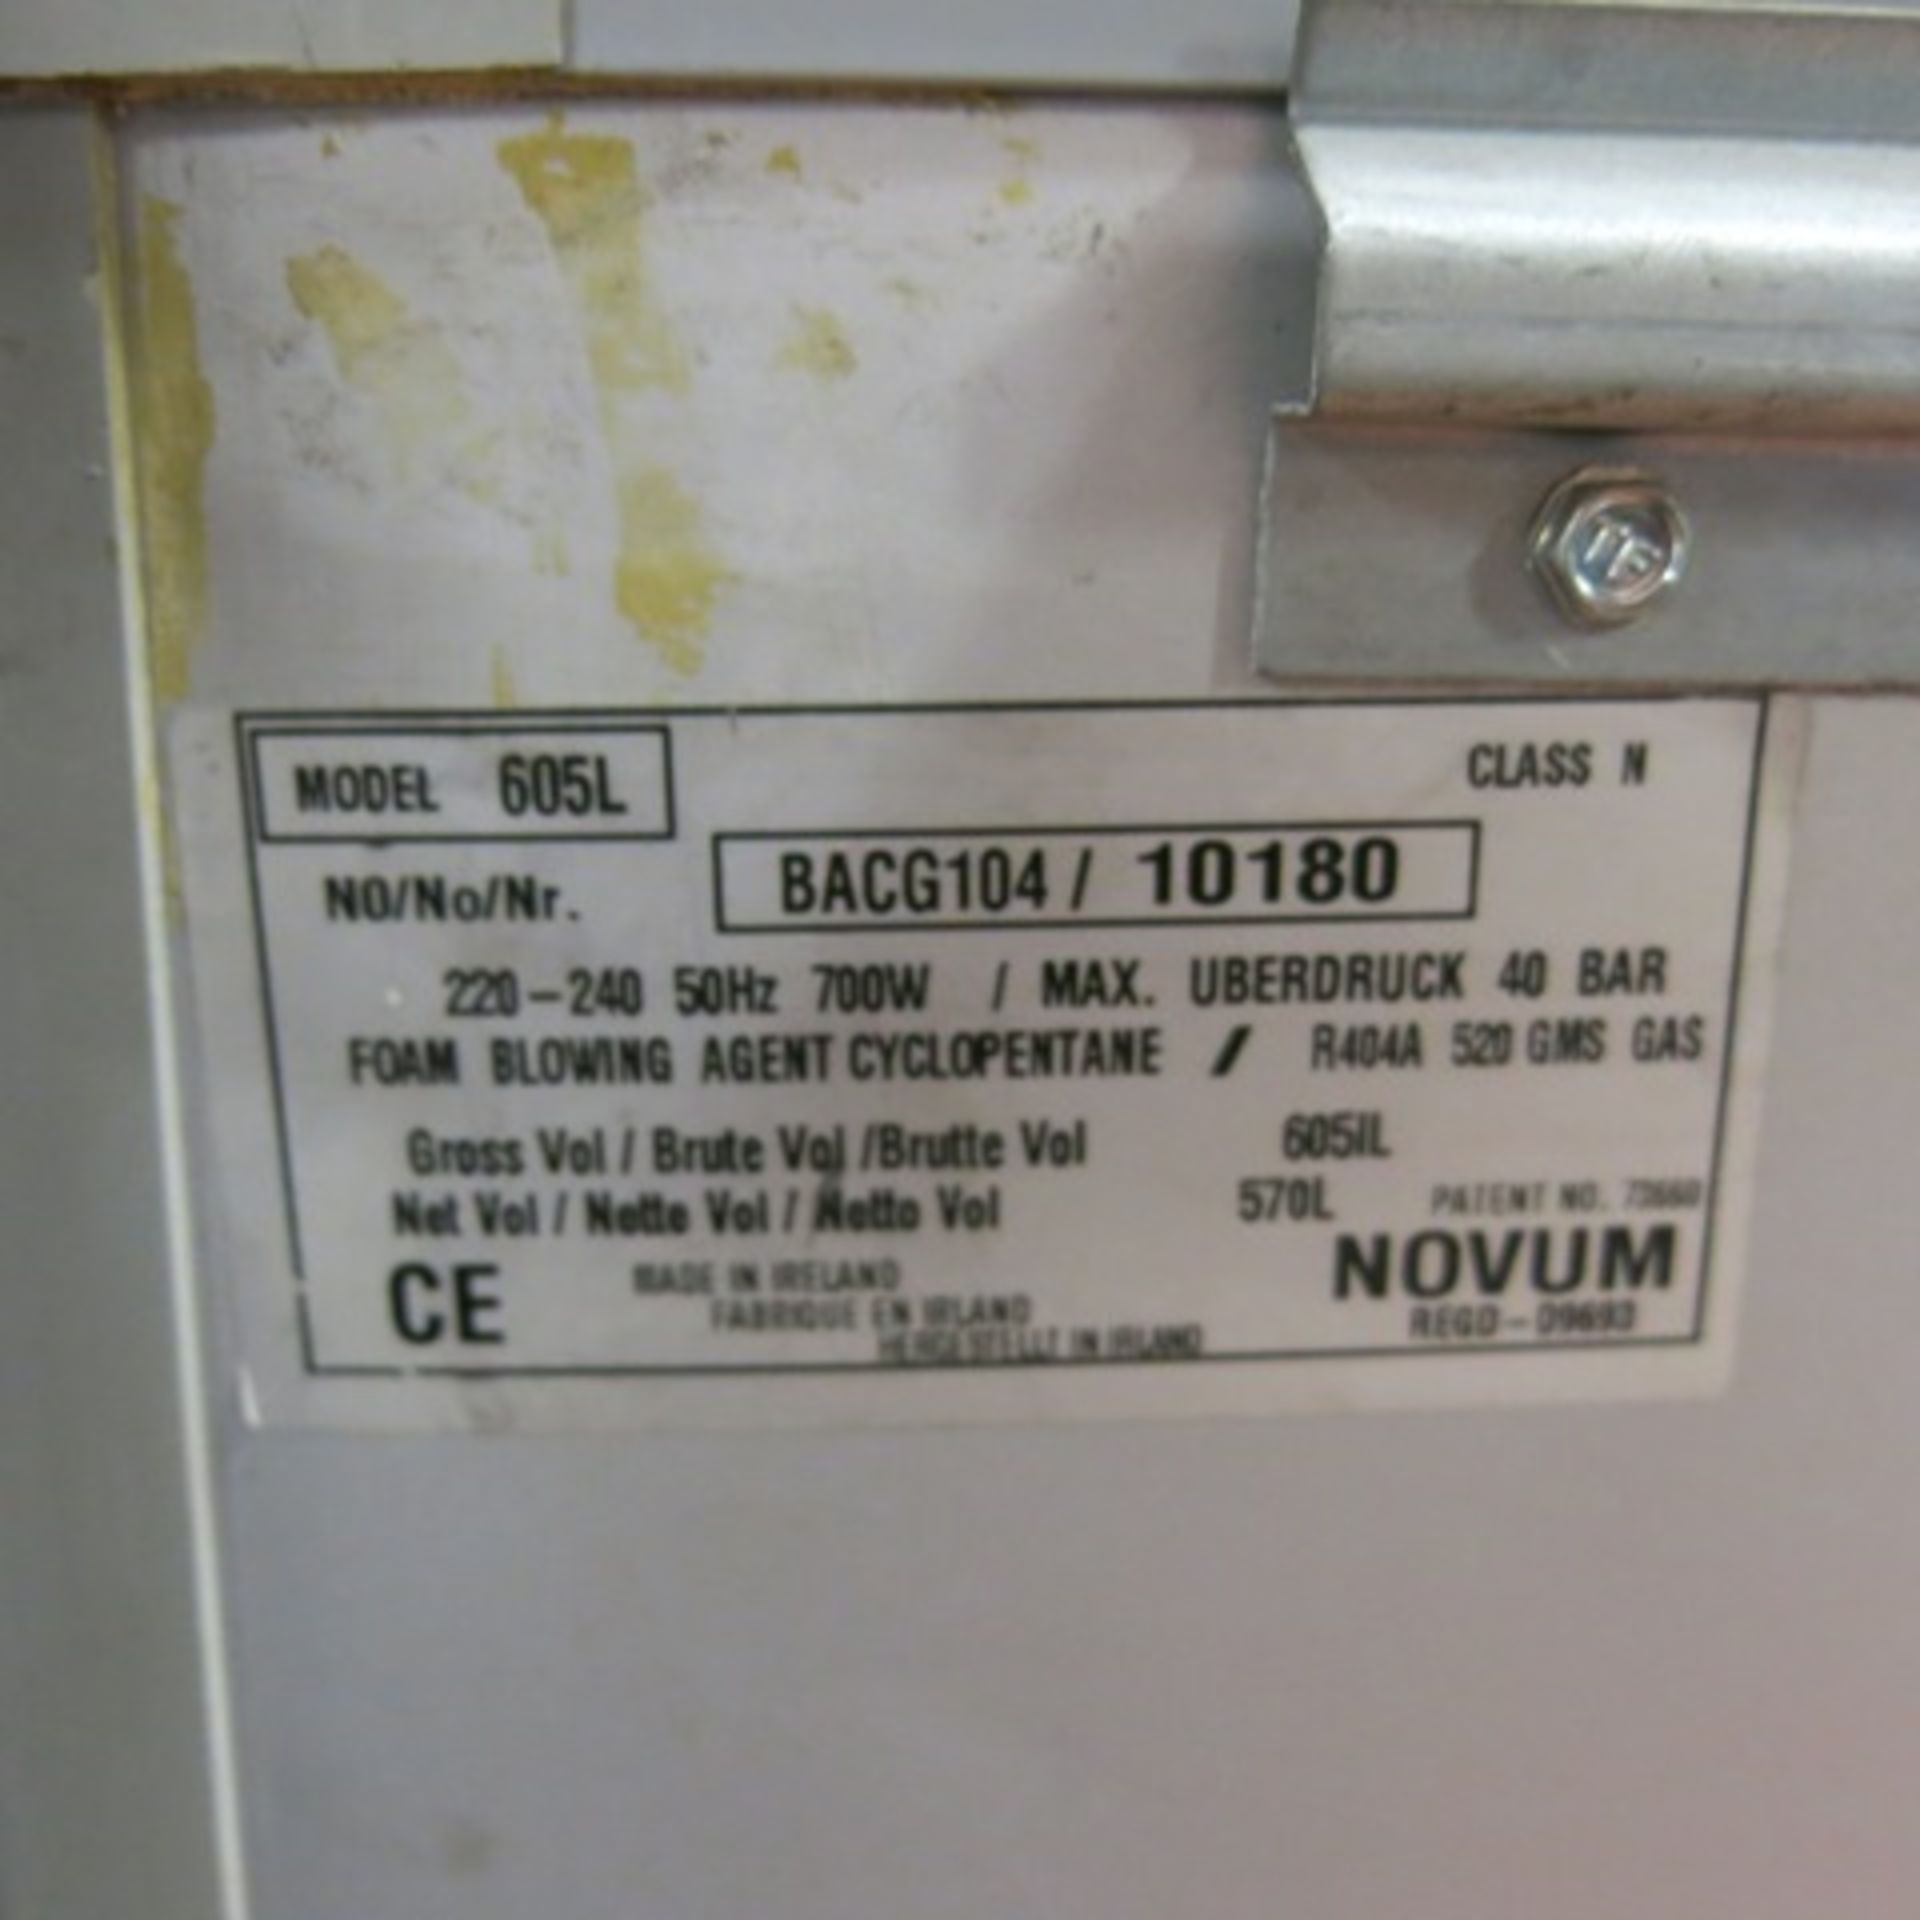 Novum Curved Top Display Chest Freezer. Model 605L, S/N BACG104/10180. Size (H)93cm x (W)170cm x ( - Image 3 of 4